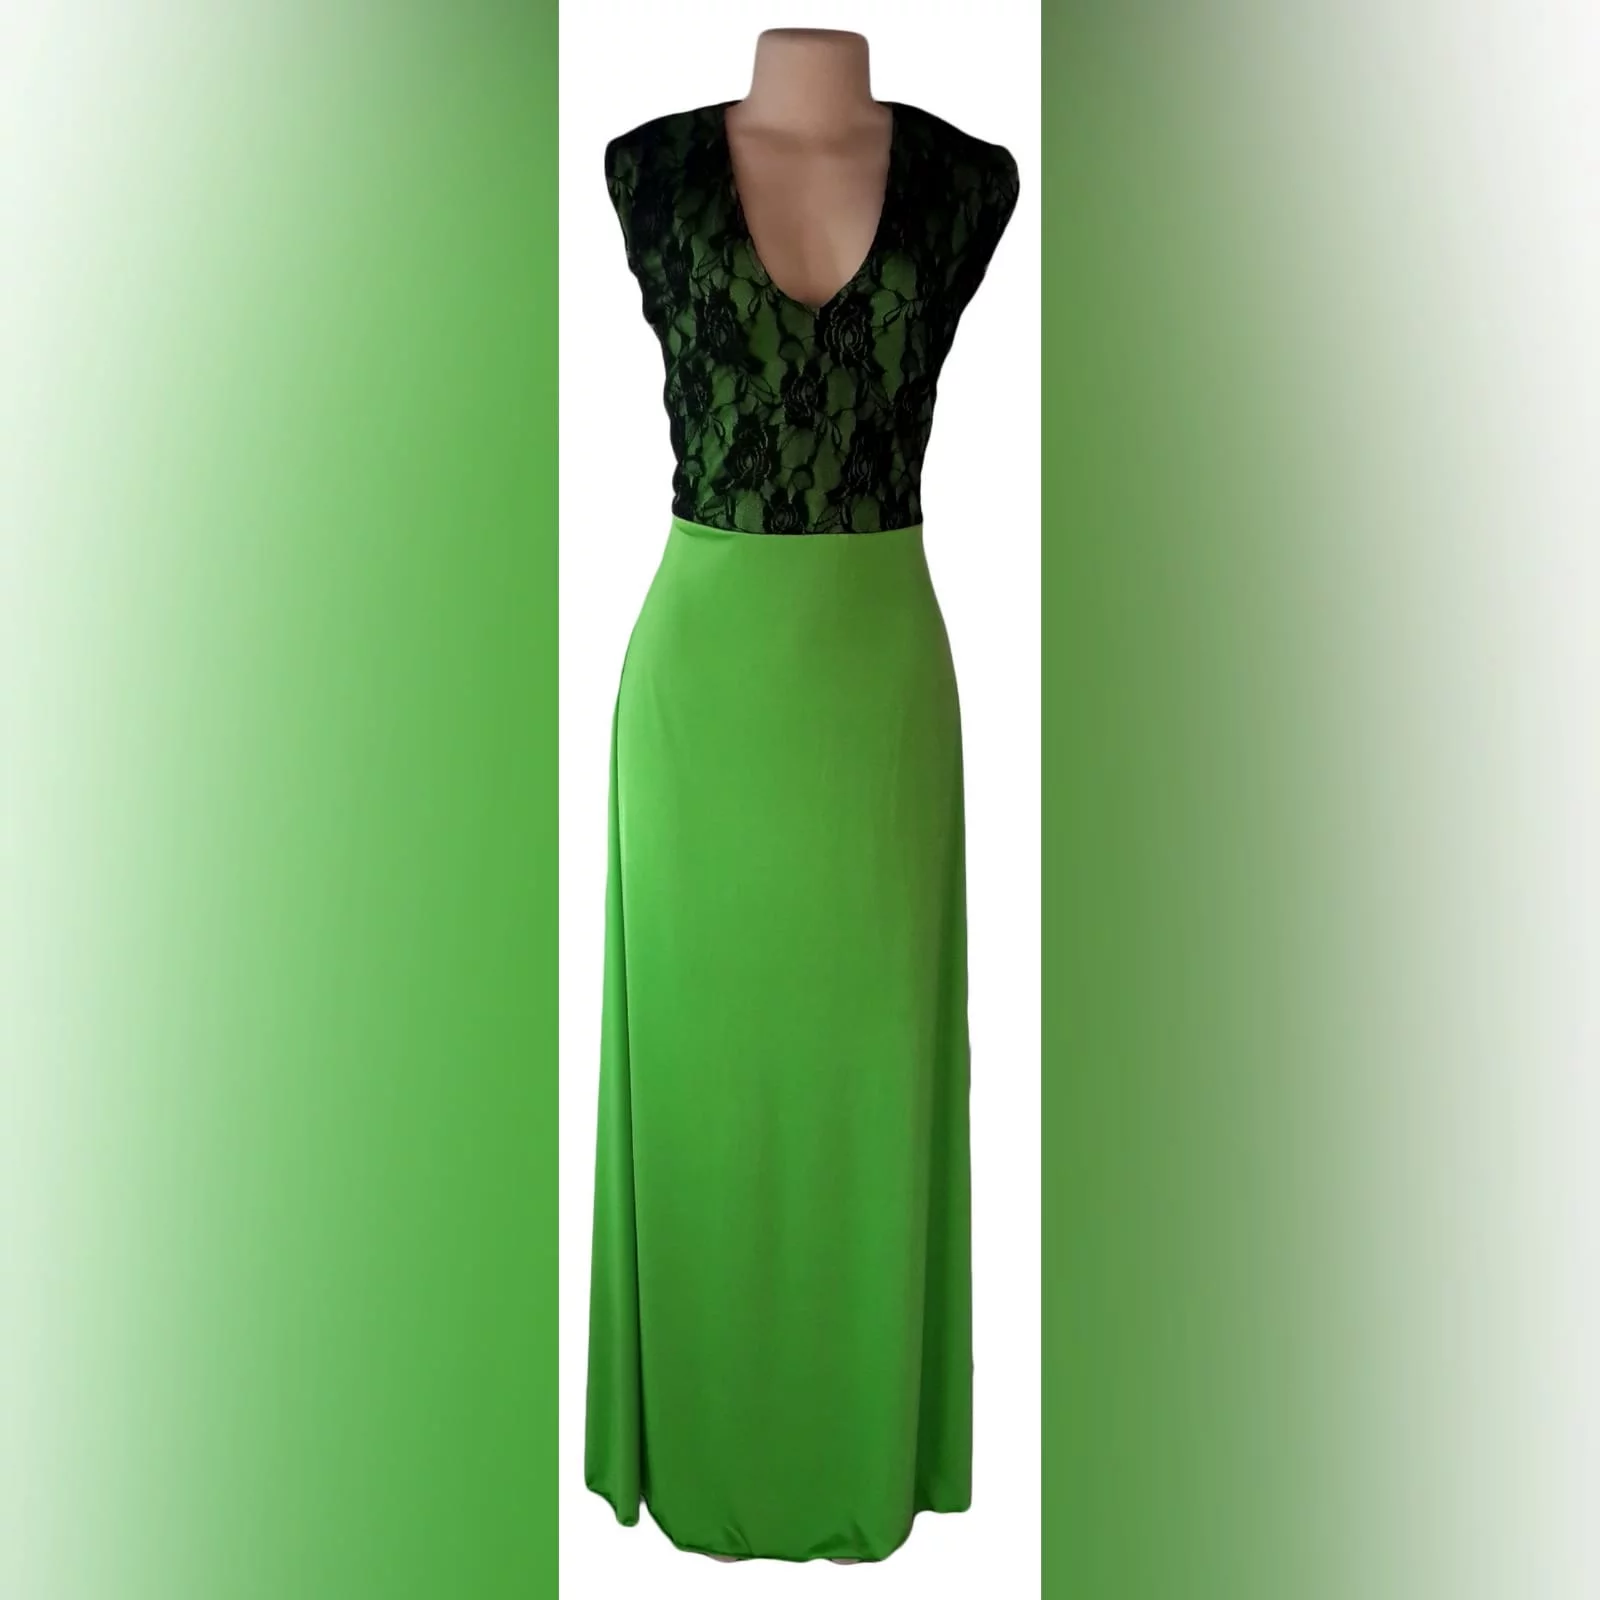 Green and black bridesmaid dresses 2 green & black bridesmaid dresses. Bodice with an overlayer of black lace.